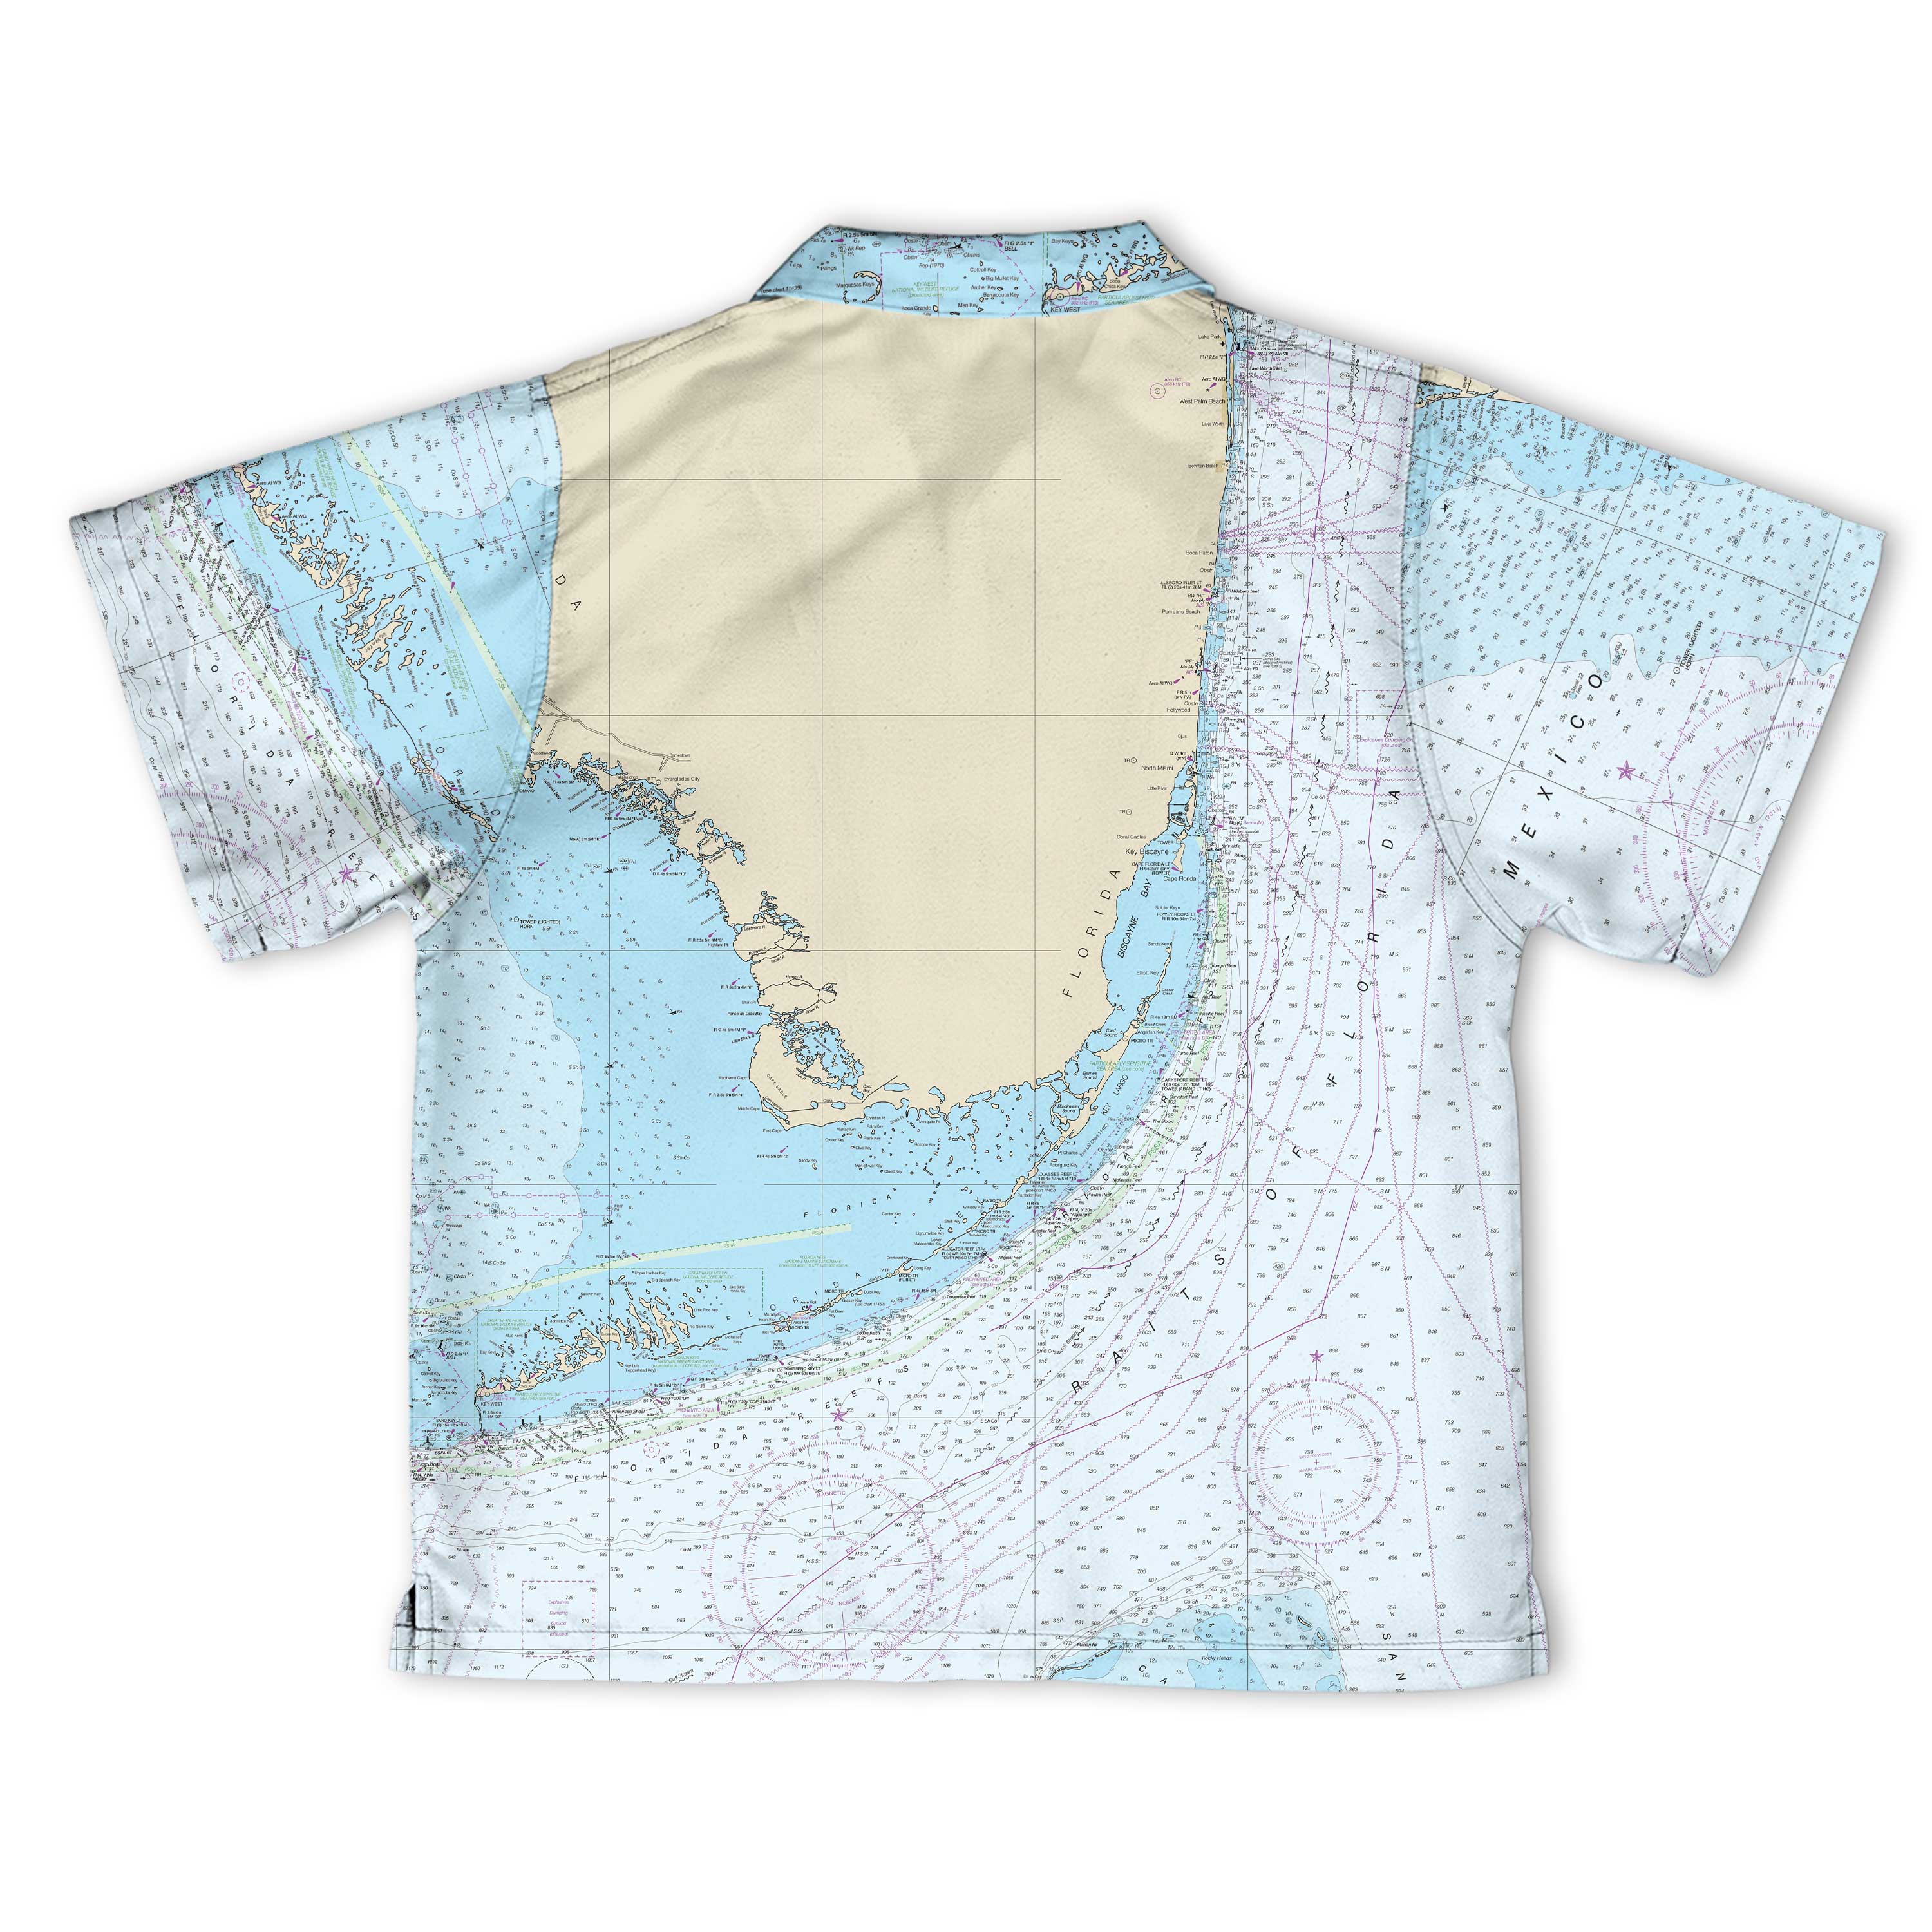 The South Florida Navigator Youth Camp Shirt